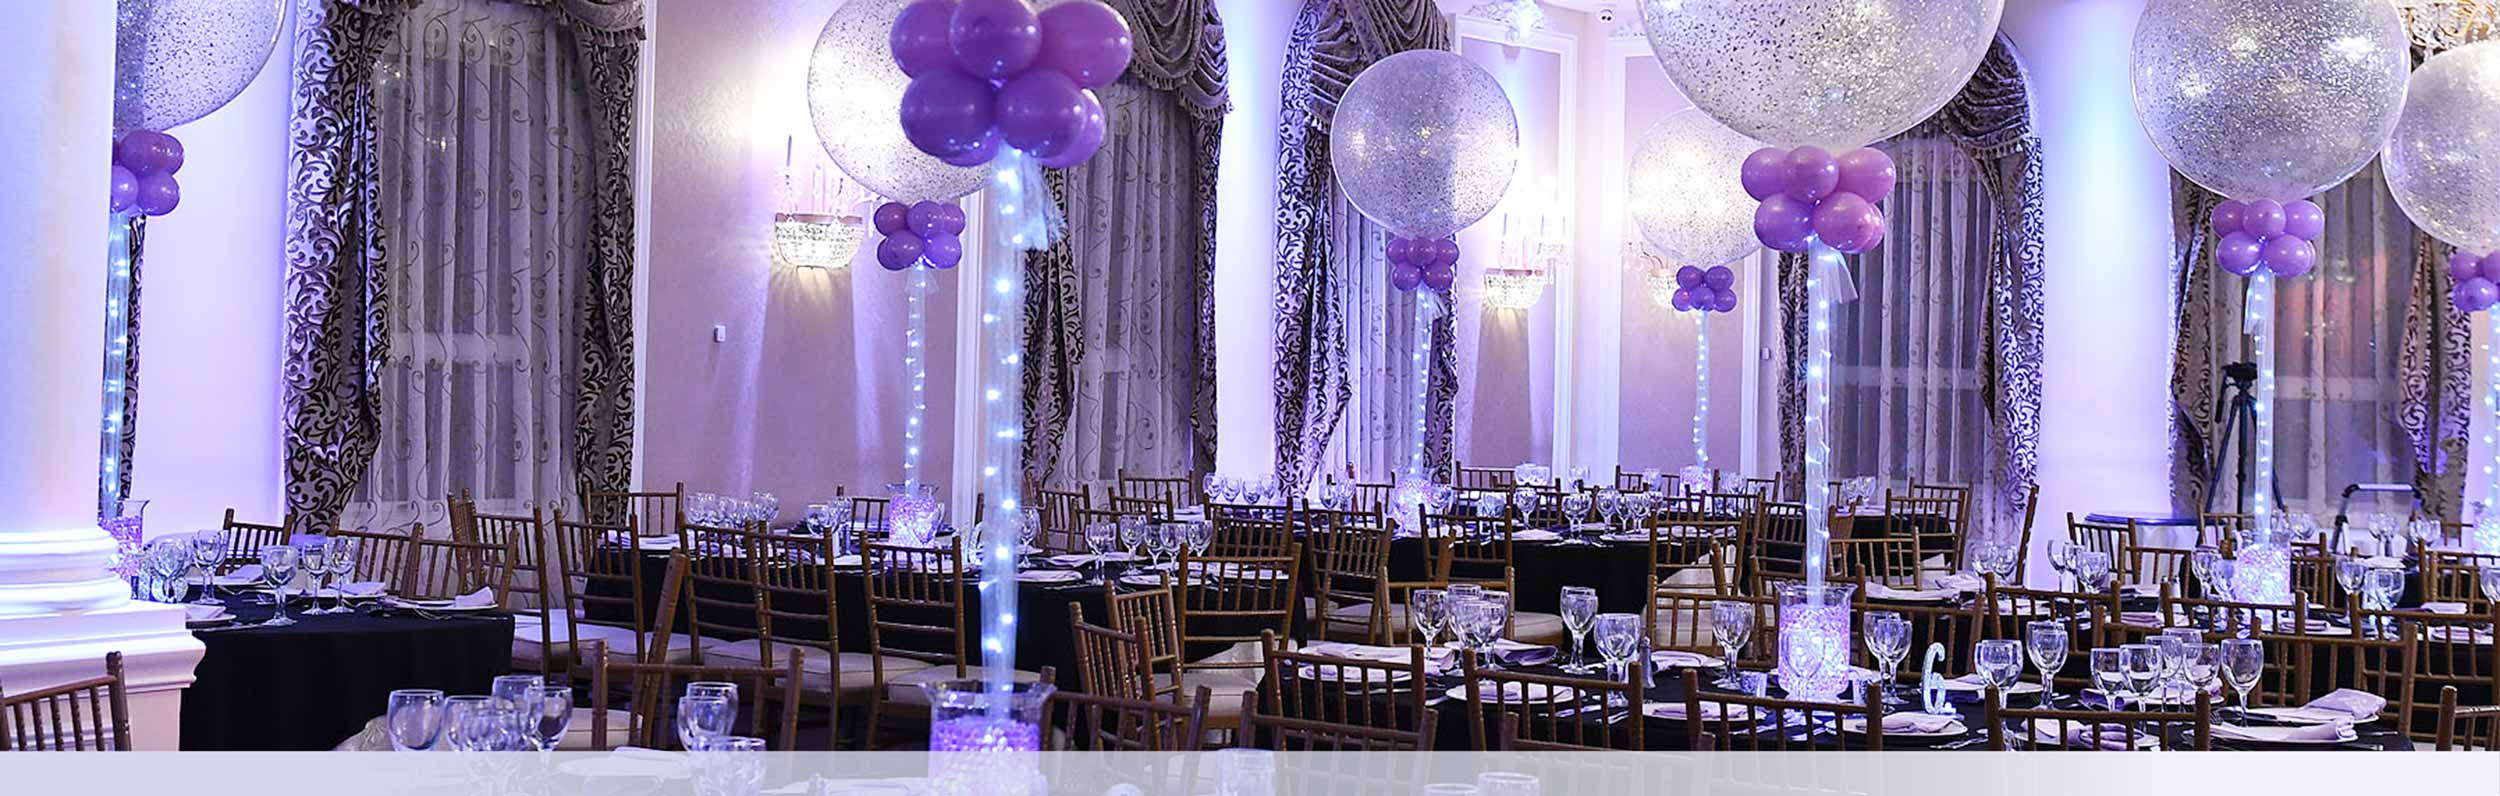 Mitzvah Banner 3 Purple Table Setup Balloons